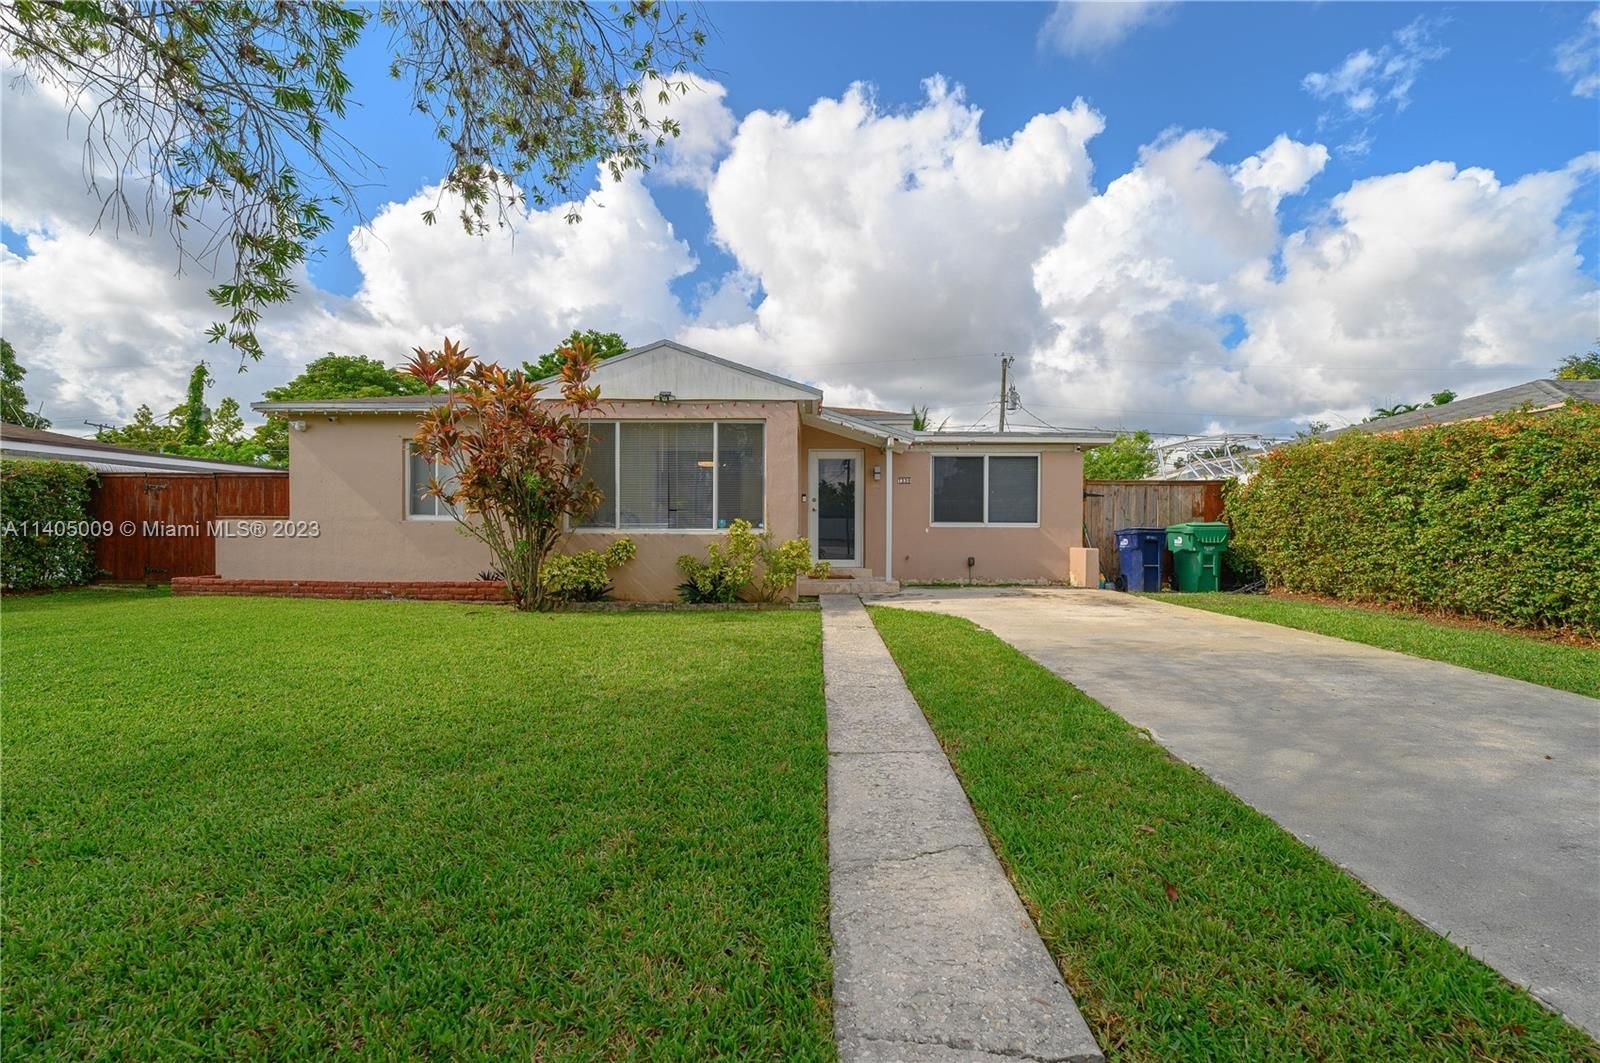 Real estate property located at 7330 15th St, Miami-Dade County, Miami, FL